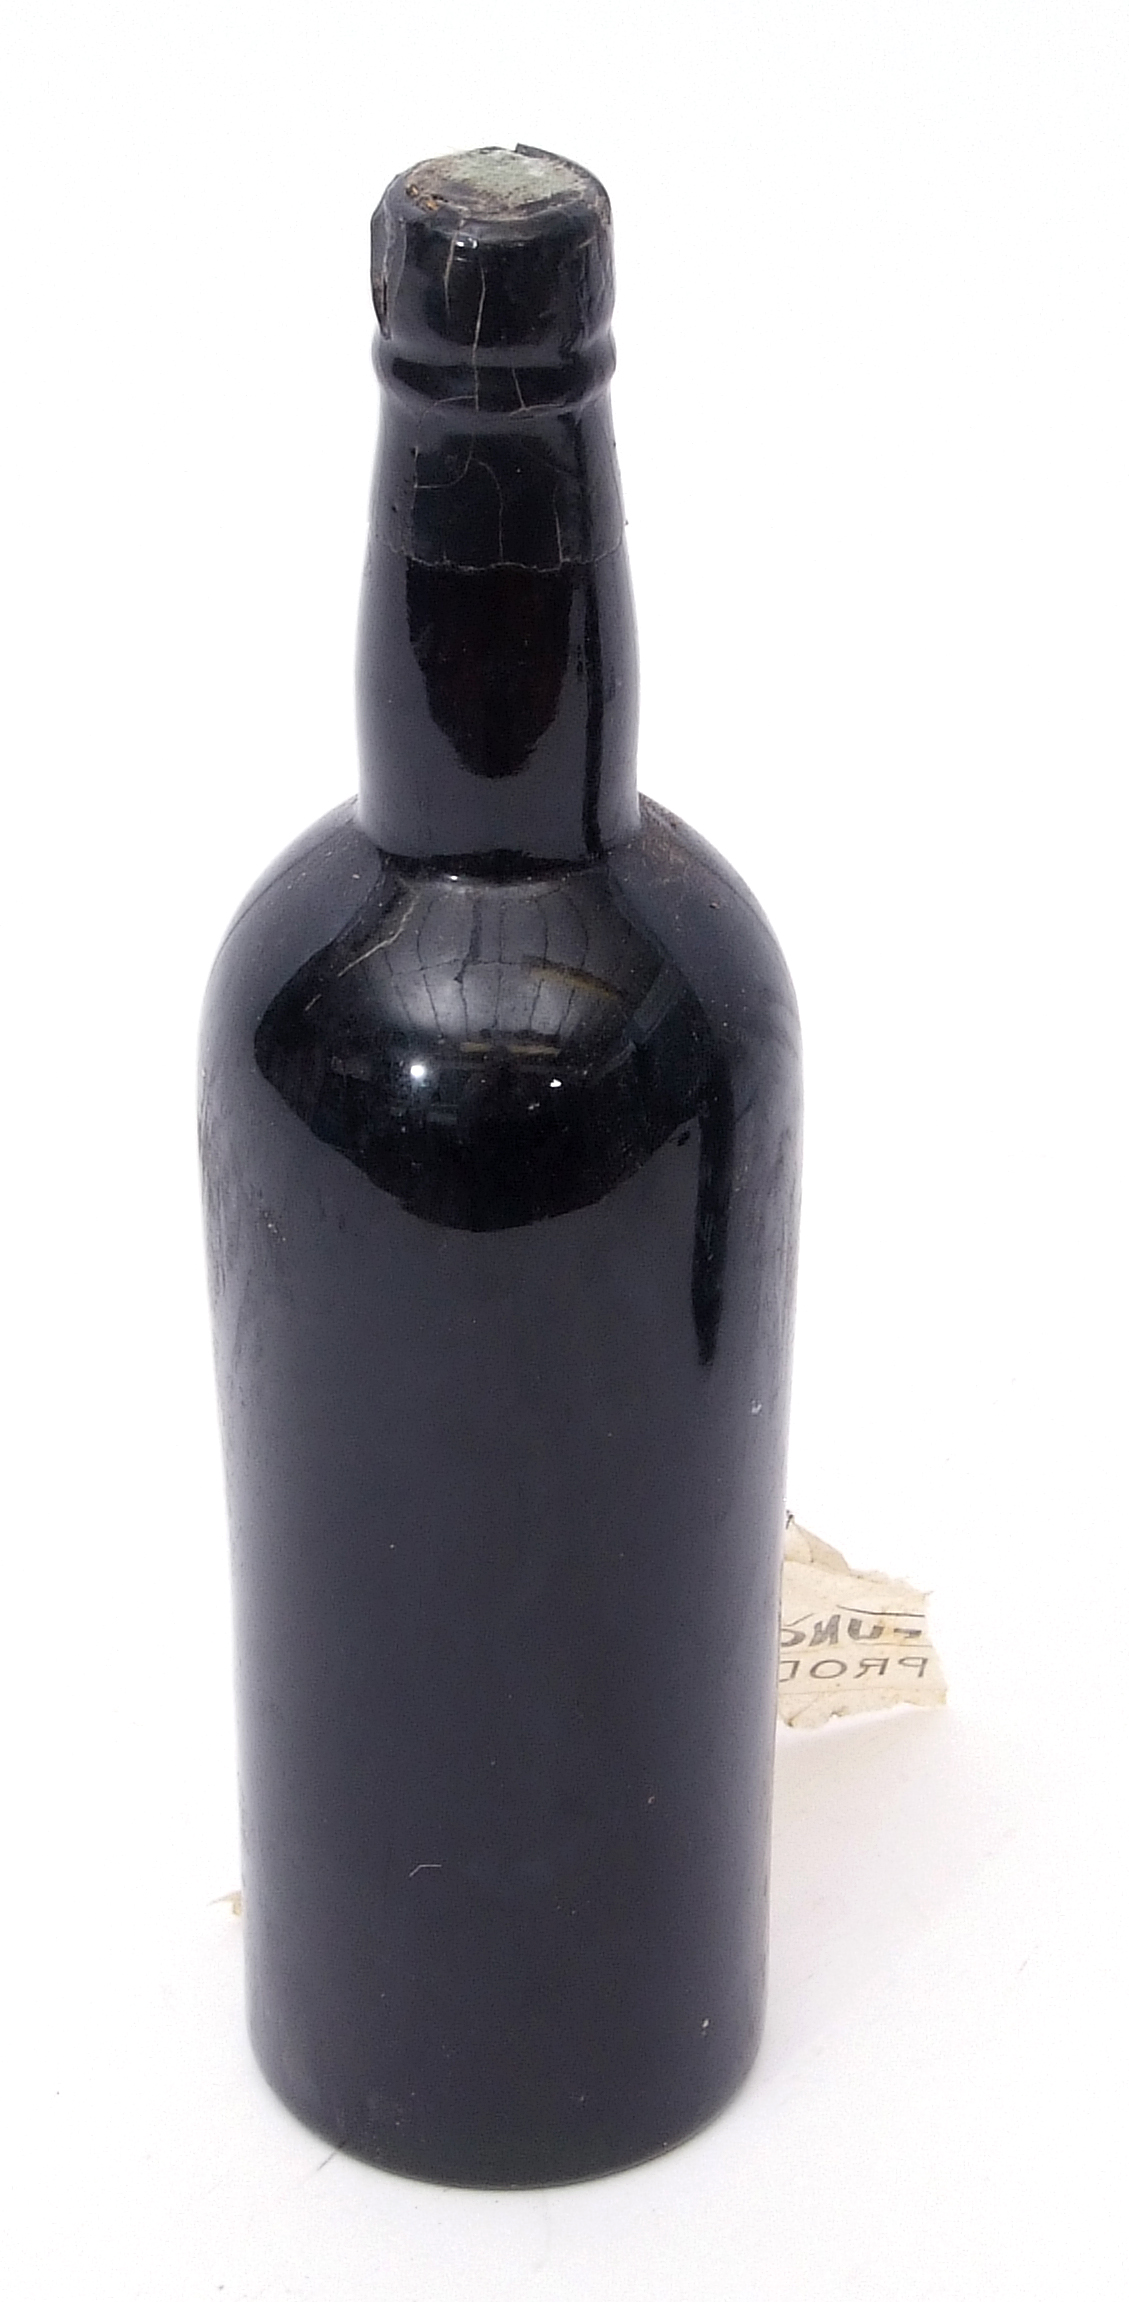 Blandy's Malmsey Madeira vintage 1901 1 bottle - Image 3 of 3